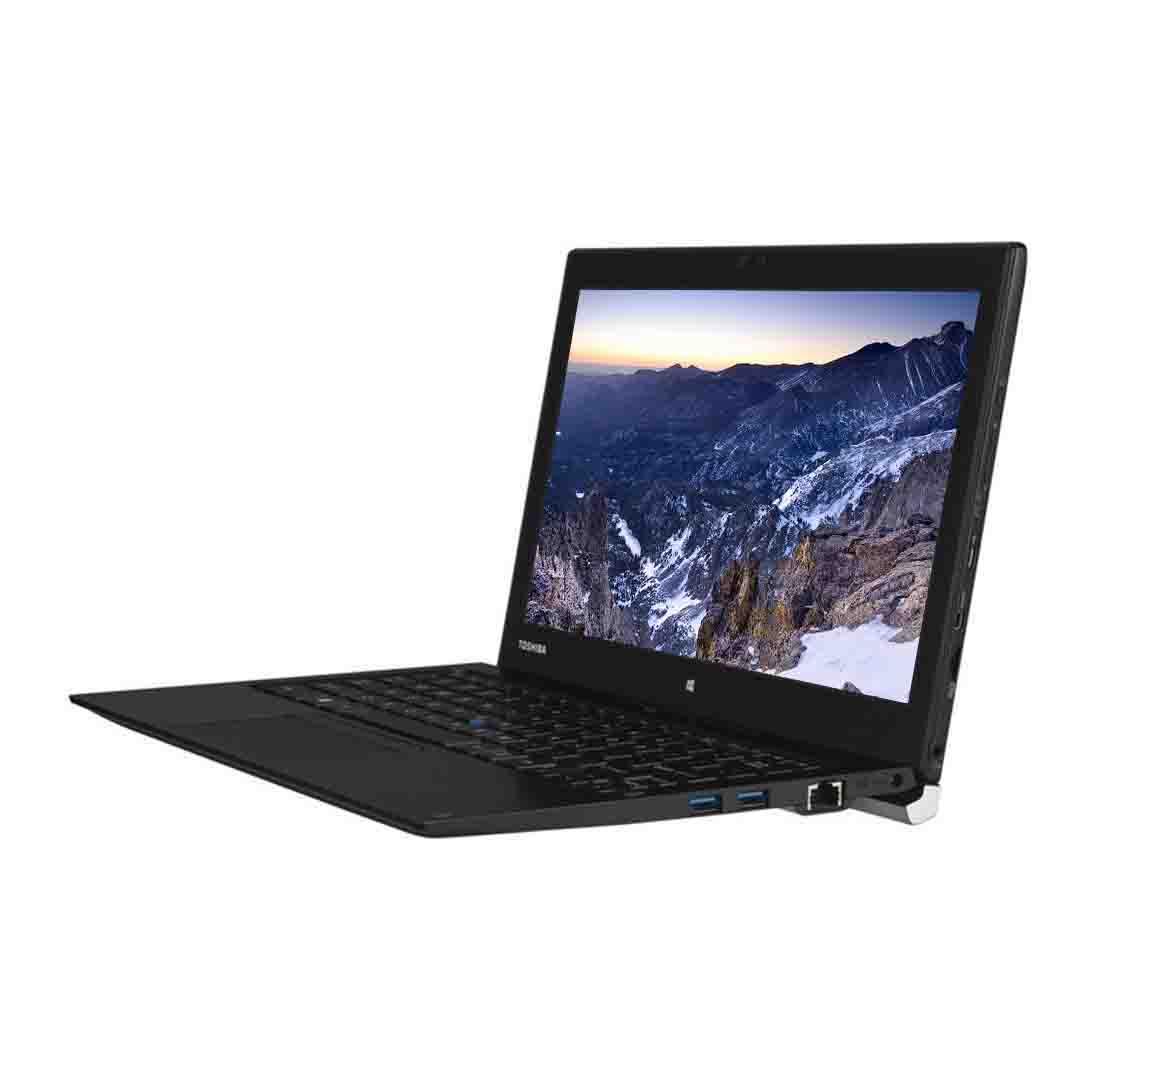 Toshiba PORTEGE Z20t-C Business Laptop, Intel Core M5-6Y57 CPU, 8GB RAM, 128GB SSD, 12.5 inch Touchscreen, Win10 Pro, Refurbished Laptop